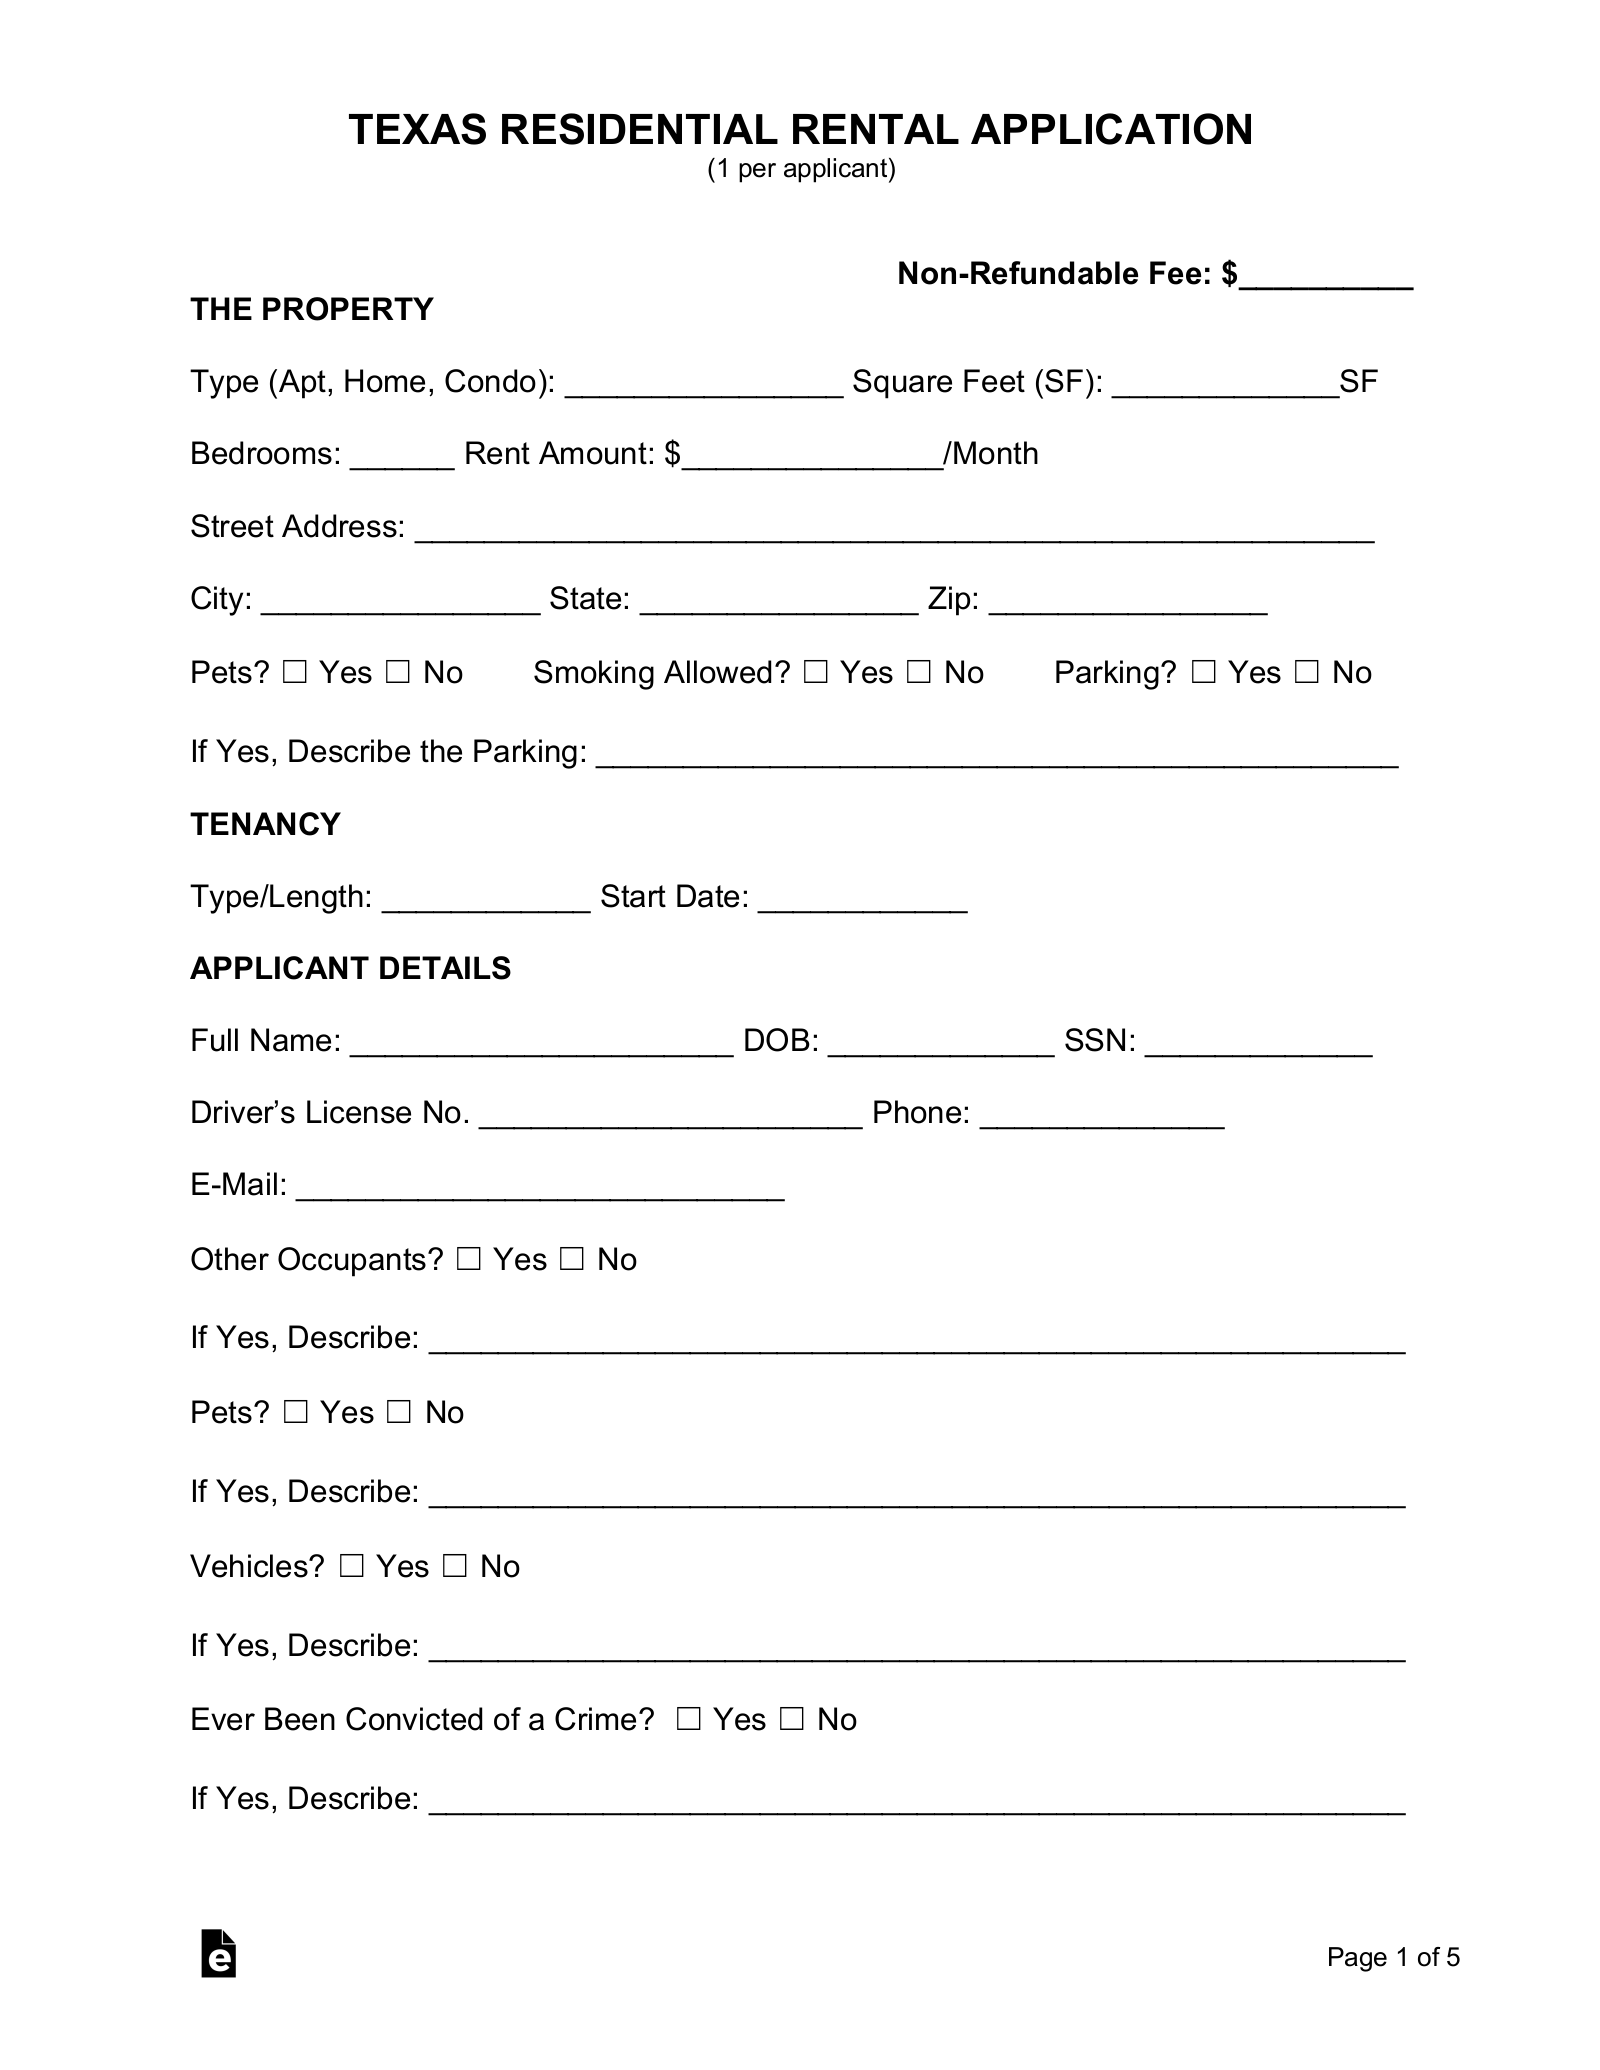 Texas Rental Application Form